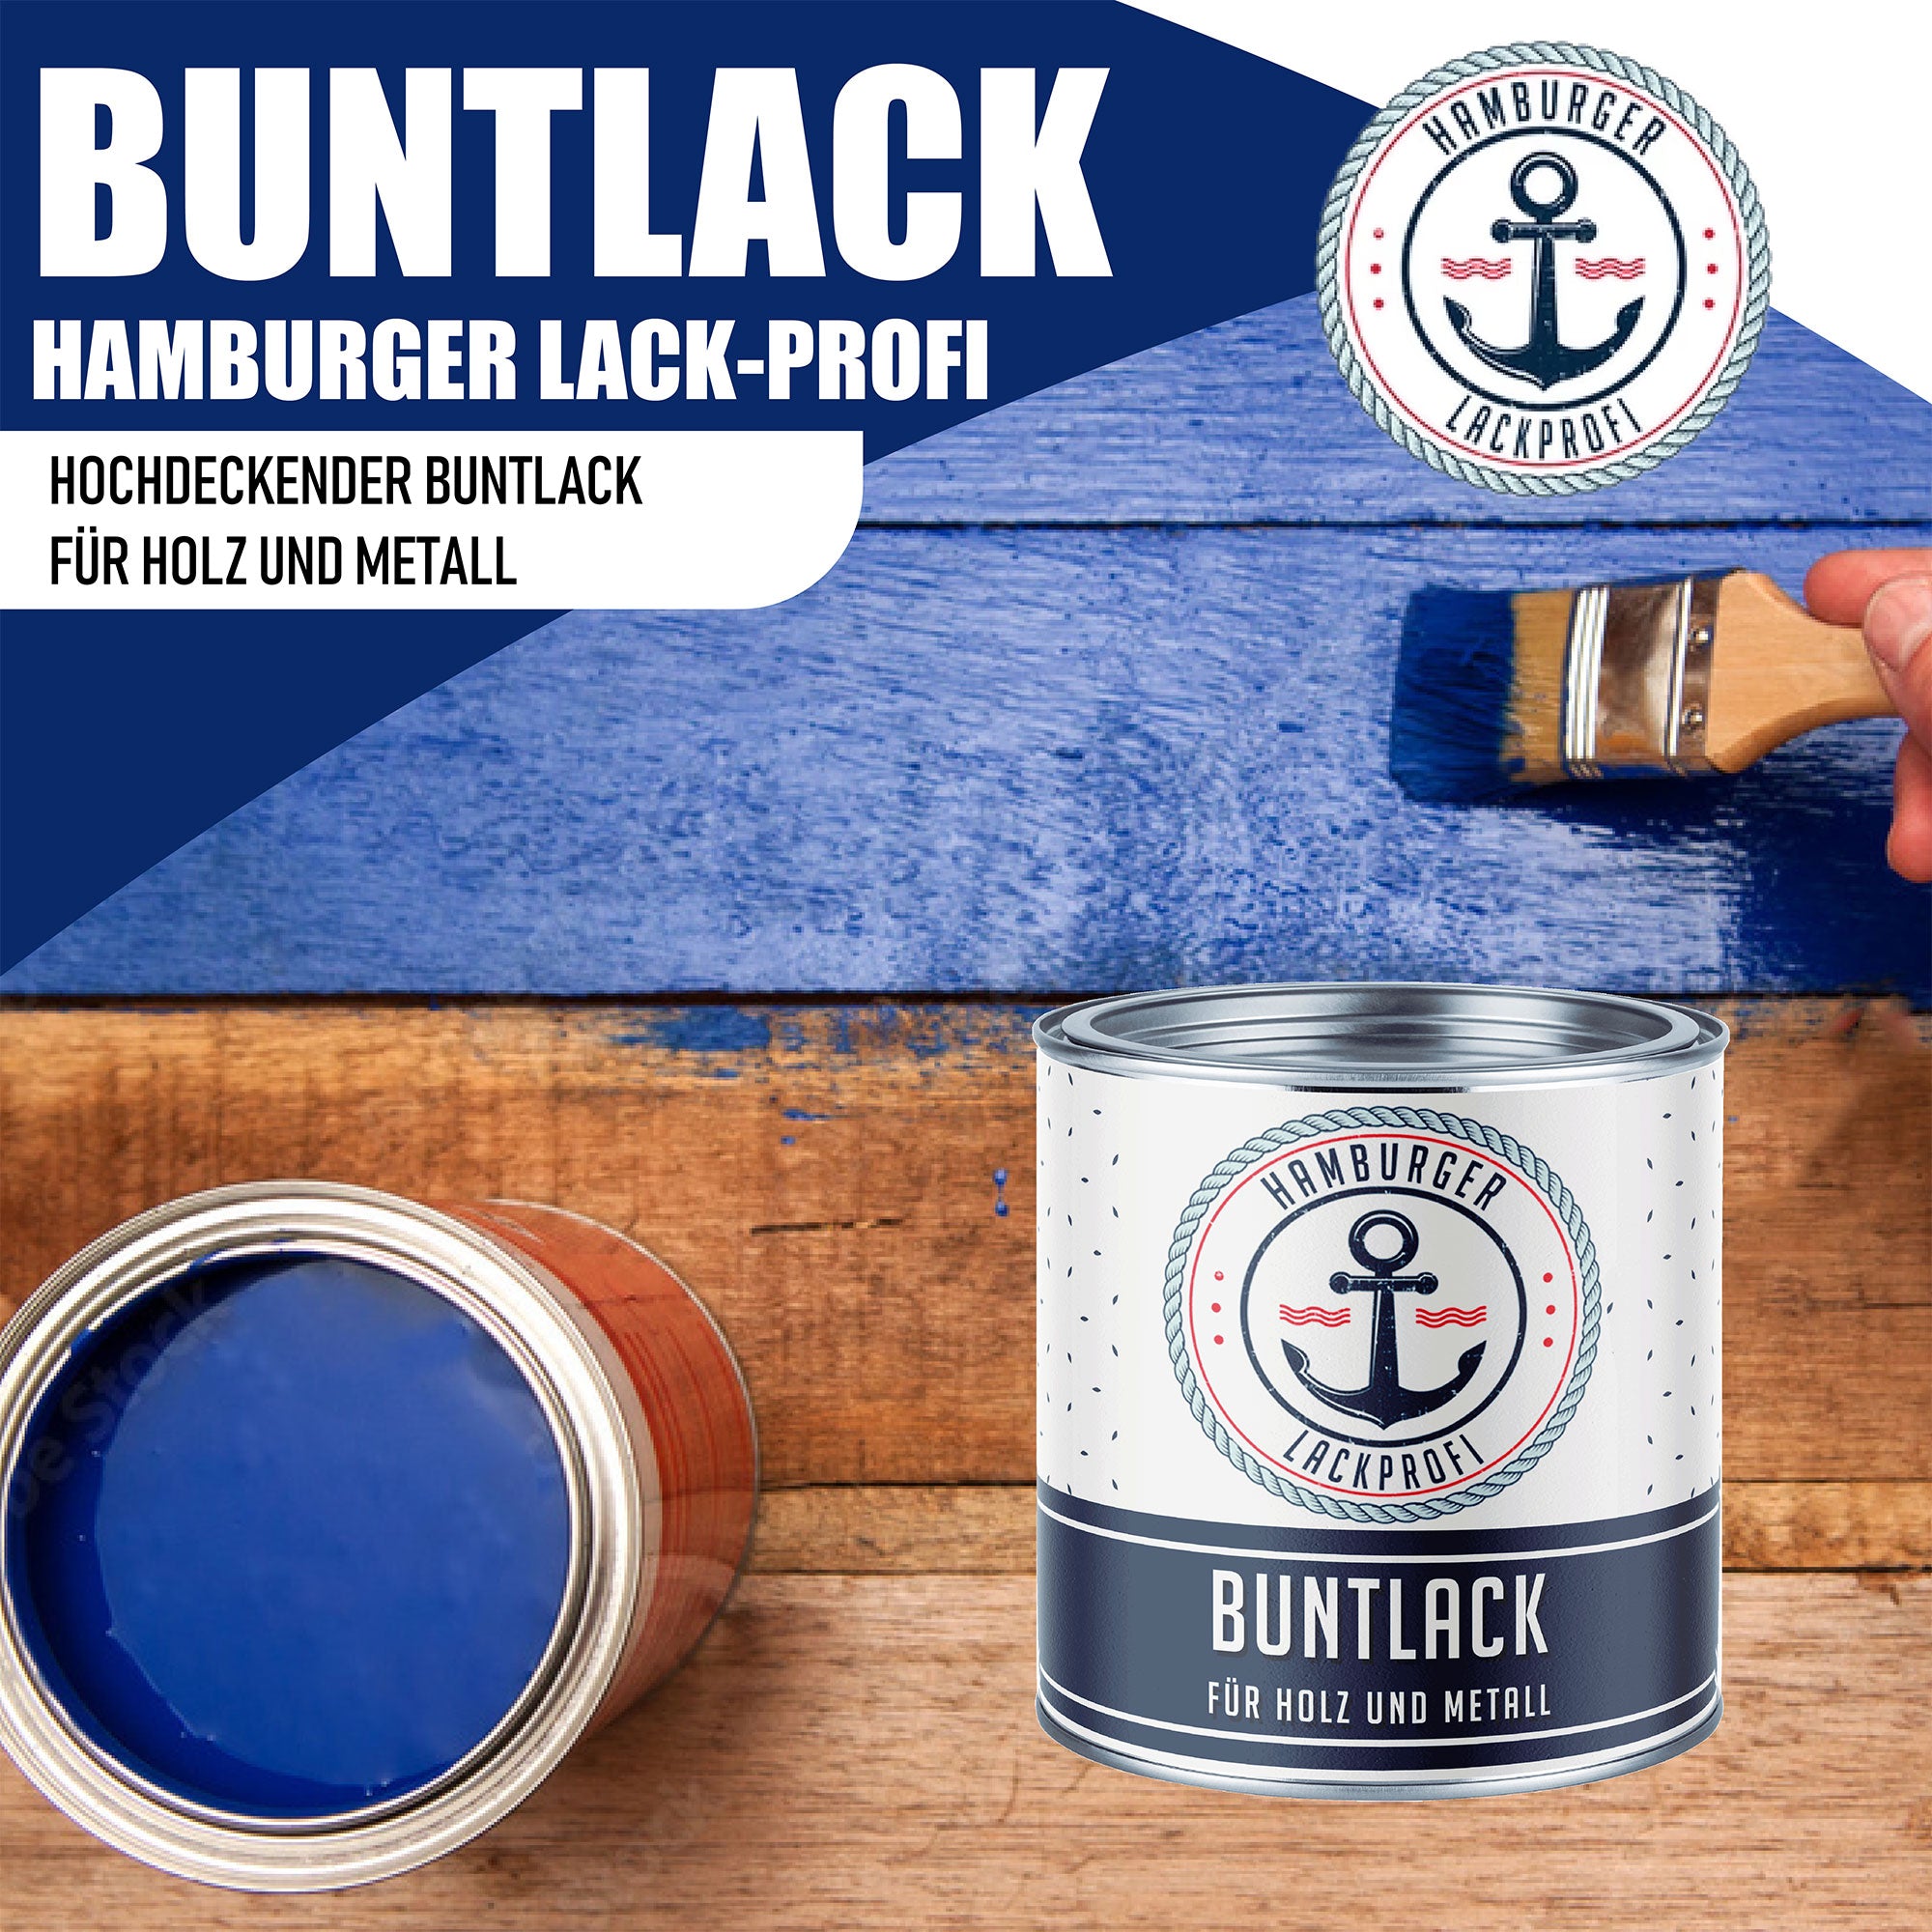 Hamburger Lack-Profi Buntlack in Signalrot RAL 3001 mit Lackierset (X300) & Verdünnung (1 L) - 30% Sparangebot